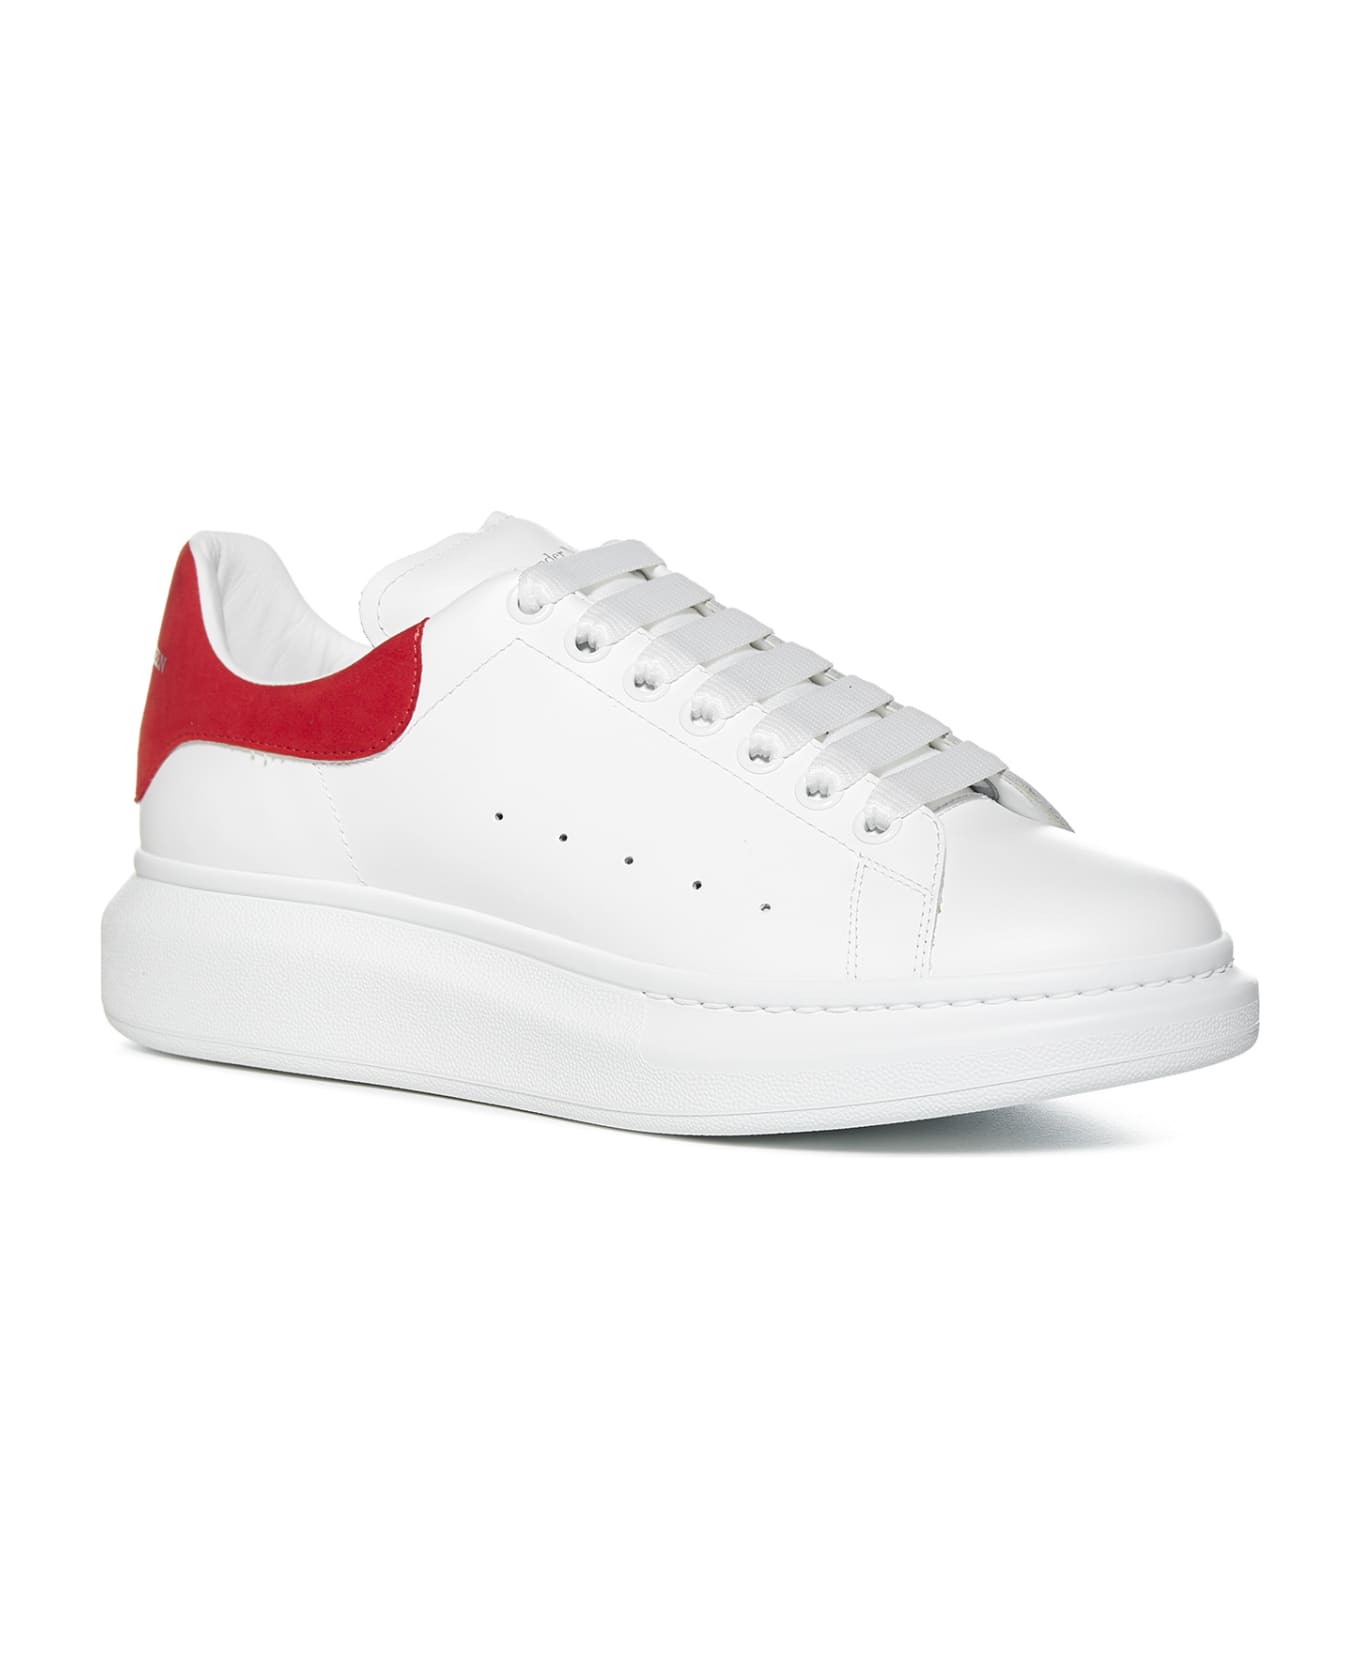 Alexander McQueen Oversize Sneakers - White Lust Red